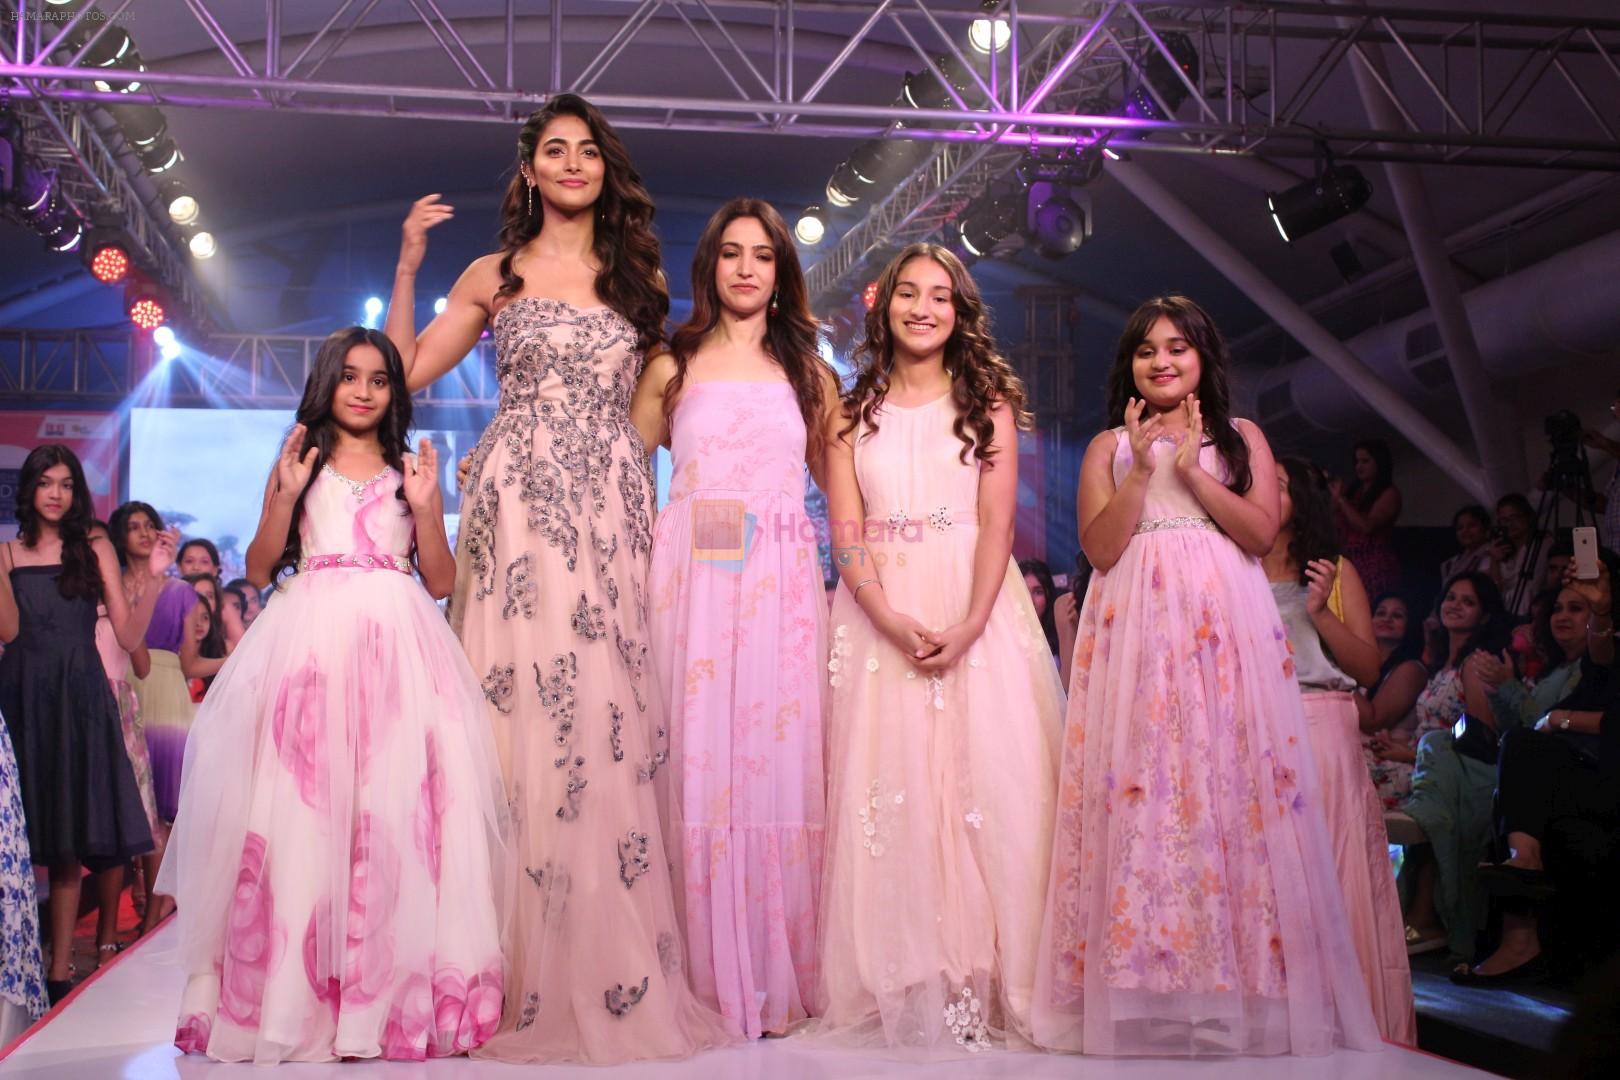 Pooja Hegde at India Kids Fashion Week 2017 on 12th Aug 2017